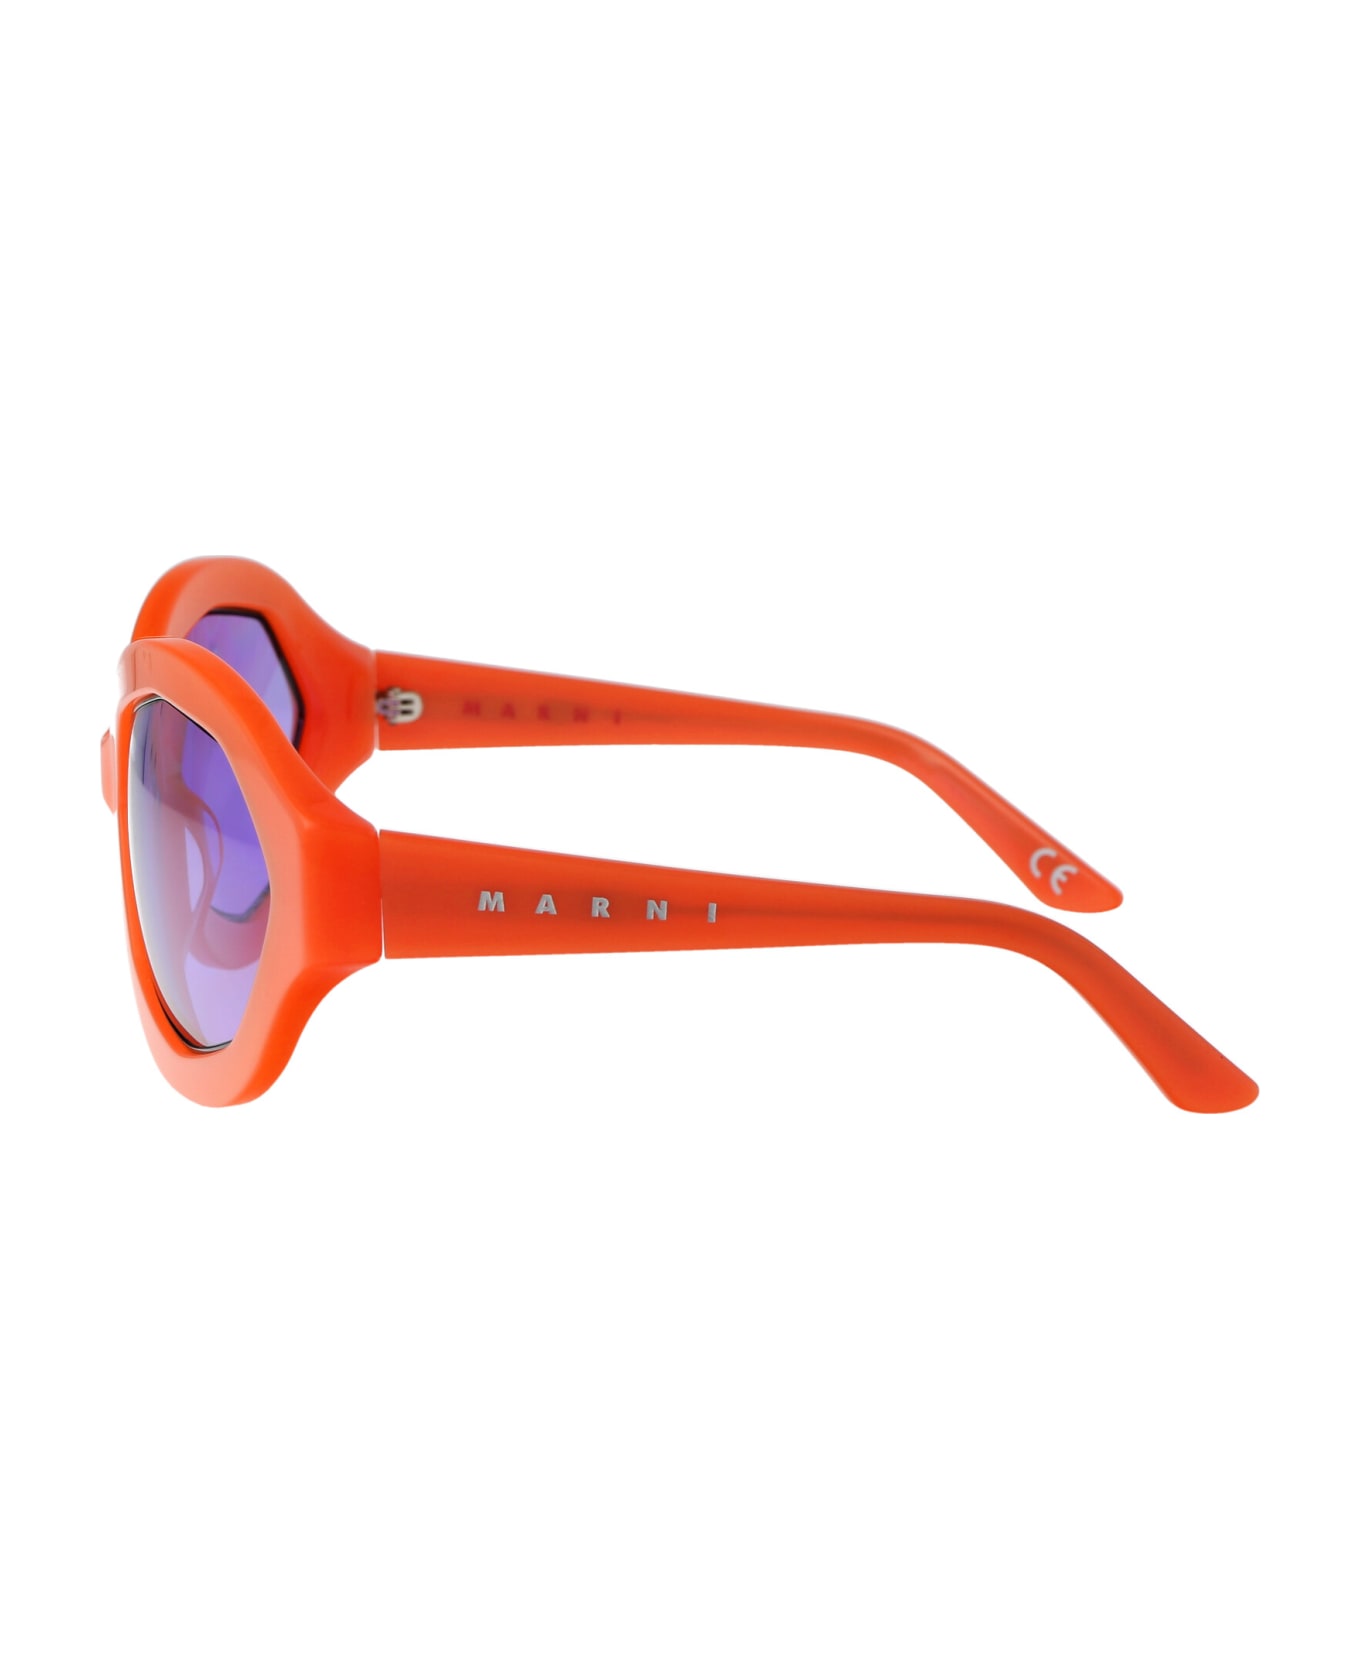 Marni Eyewear Cumulus Cloud Sunglasses - CLOUD ORANGE サングラス